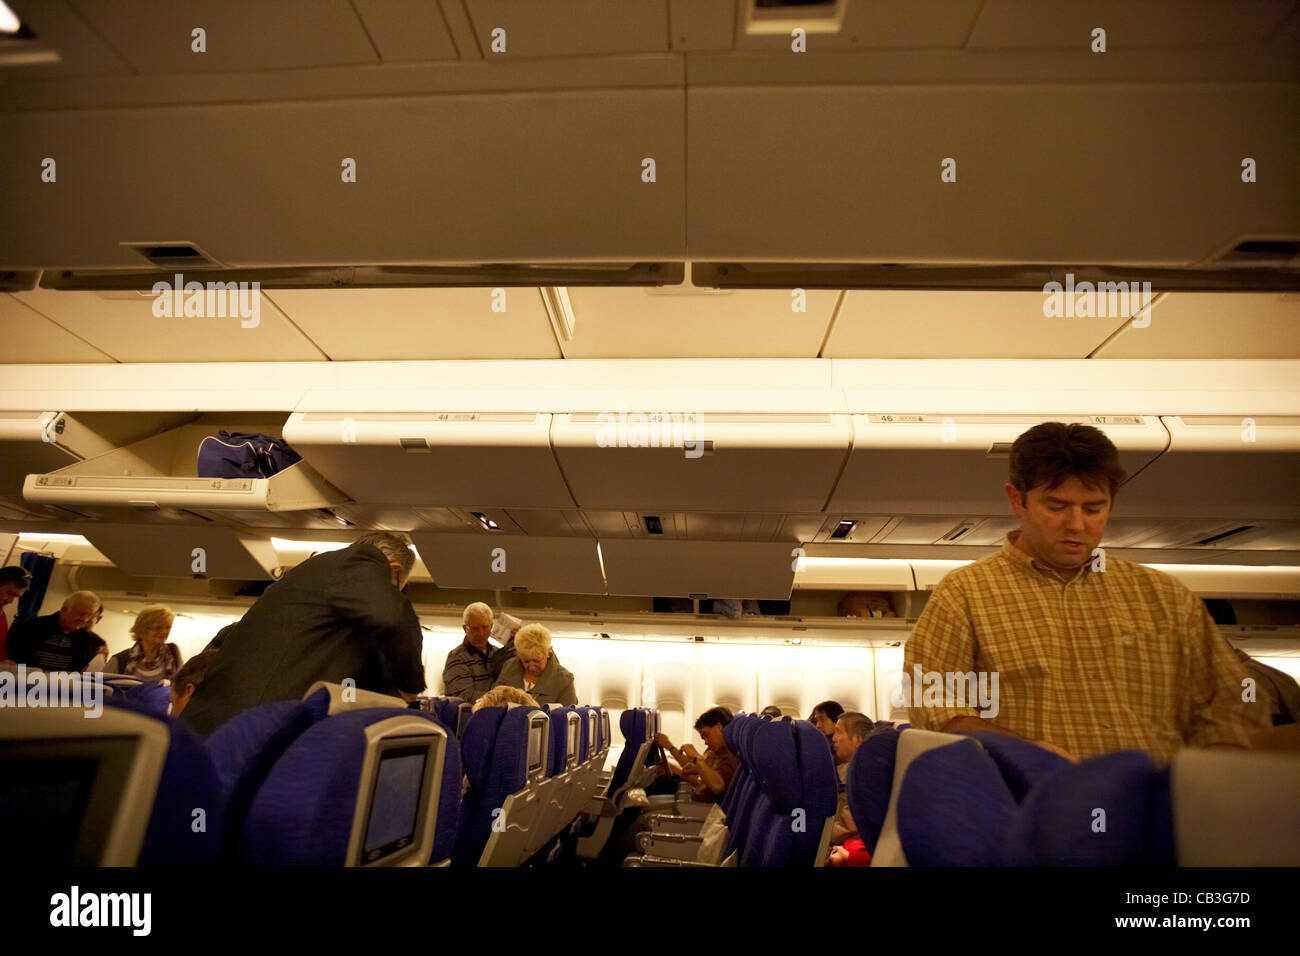 passengers boarding a 747 passenger aircraft filling up overhead lockers Stock Photo